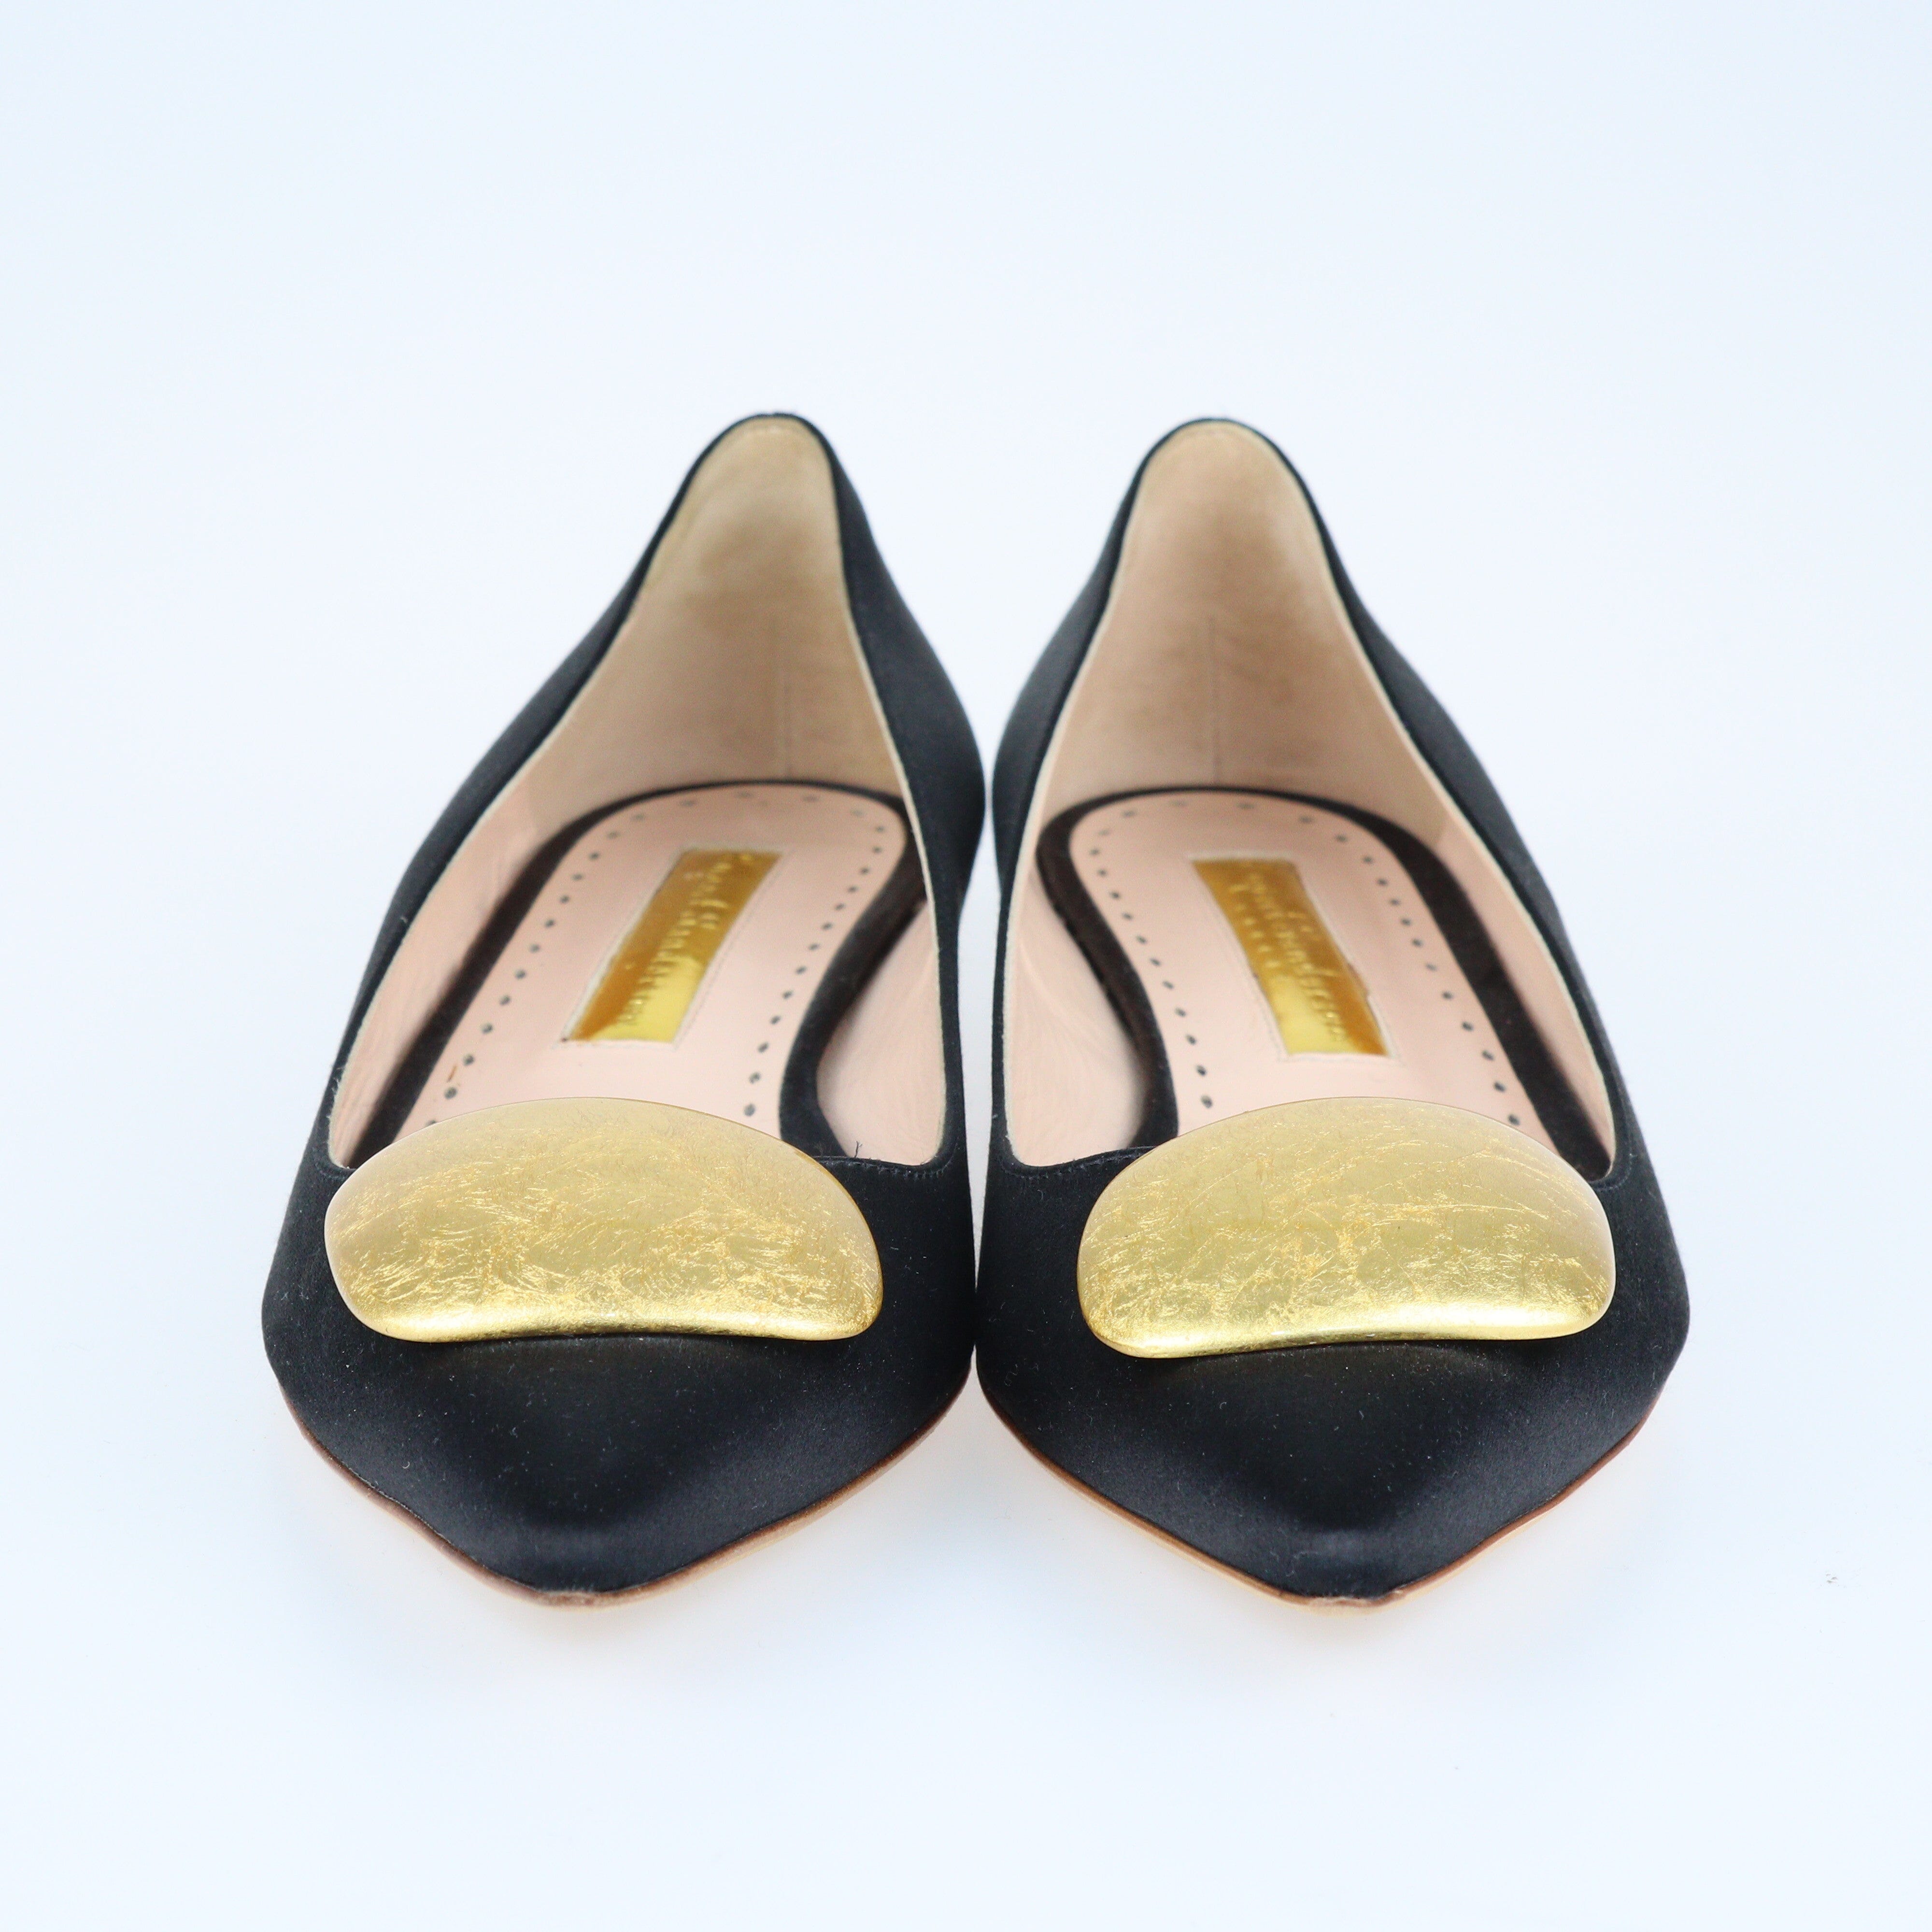 Black/Gold Ballet Flats Shoes Rupert Sanderson 